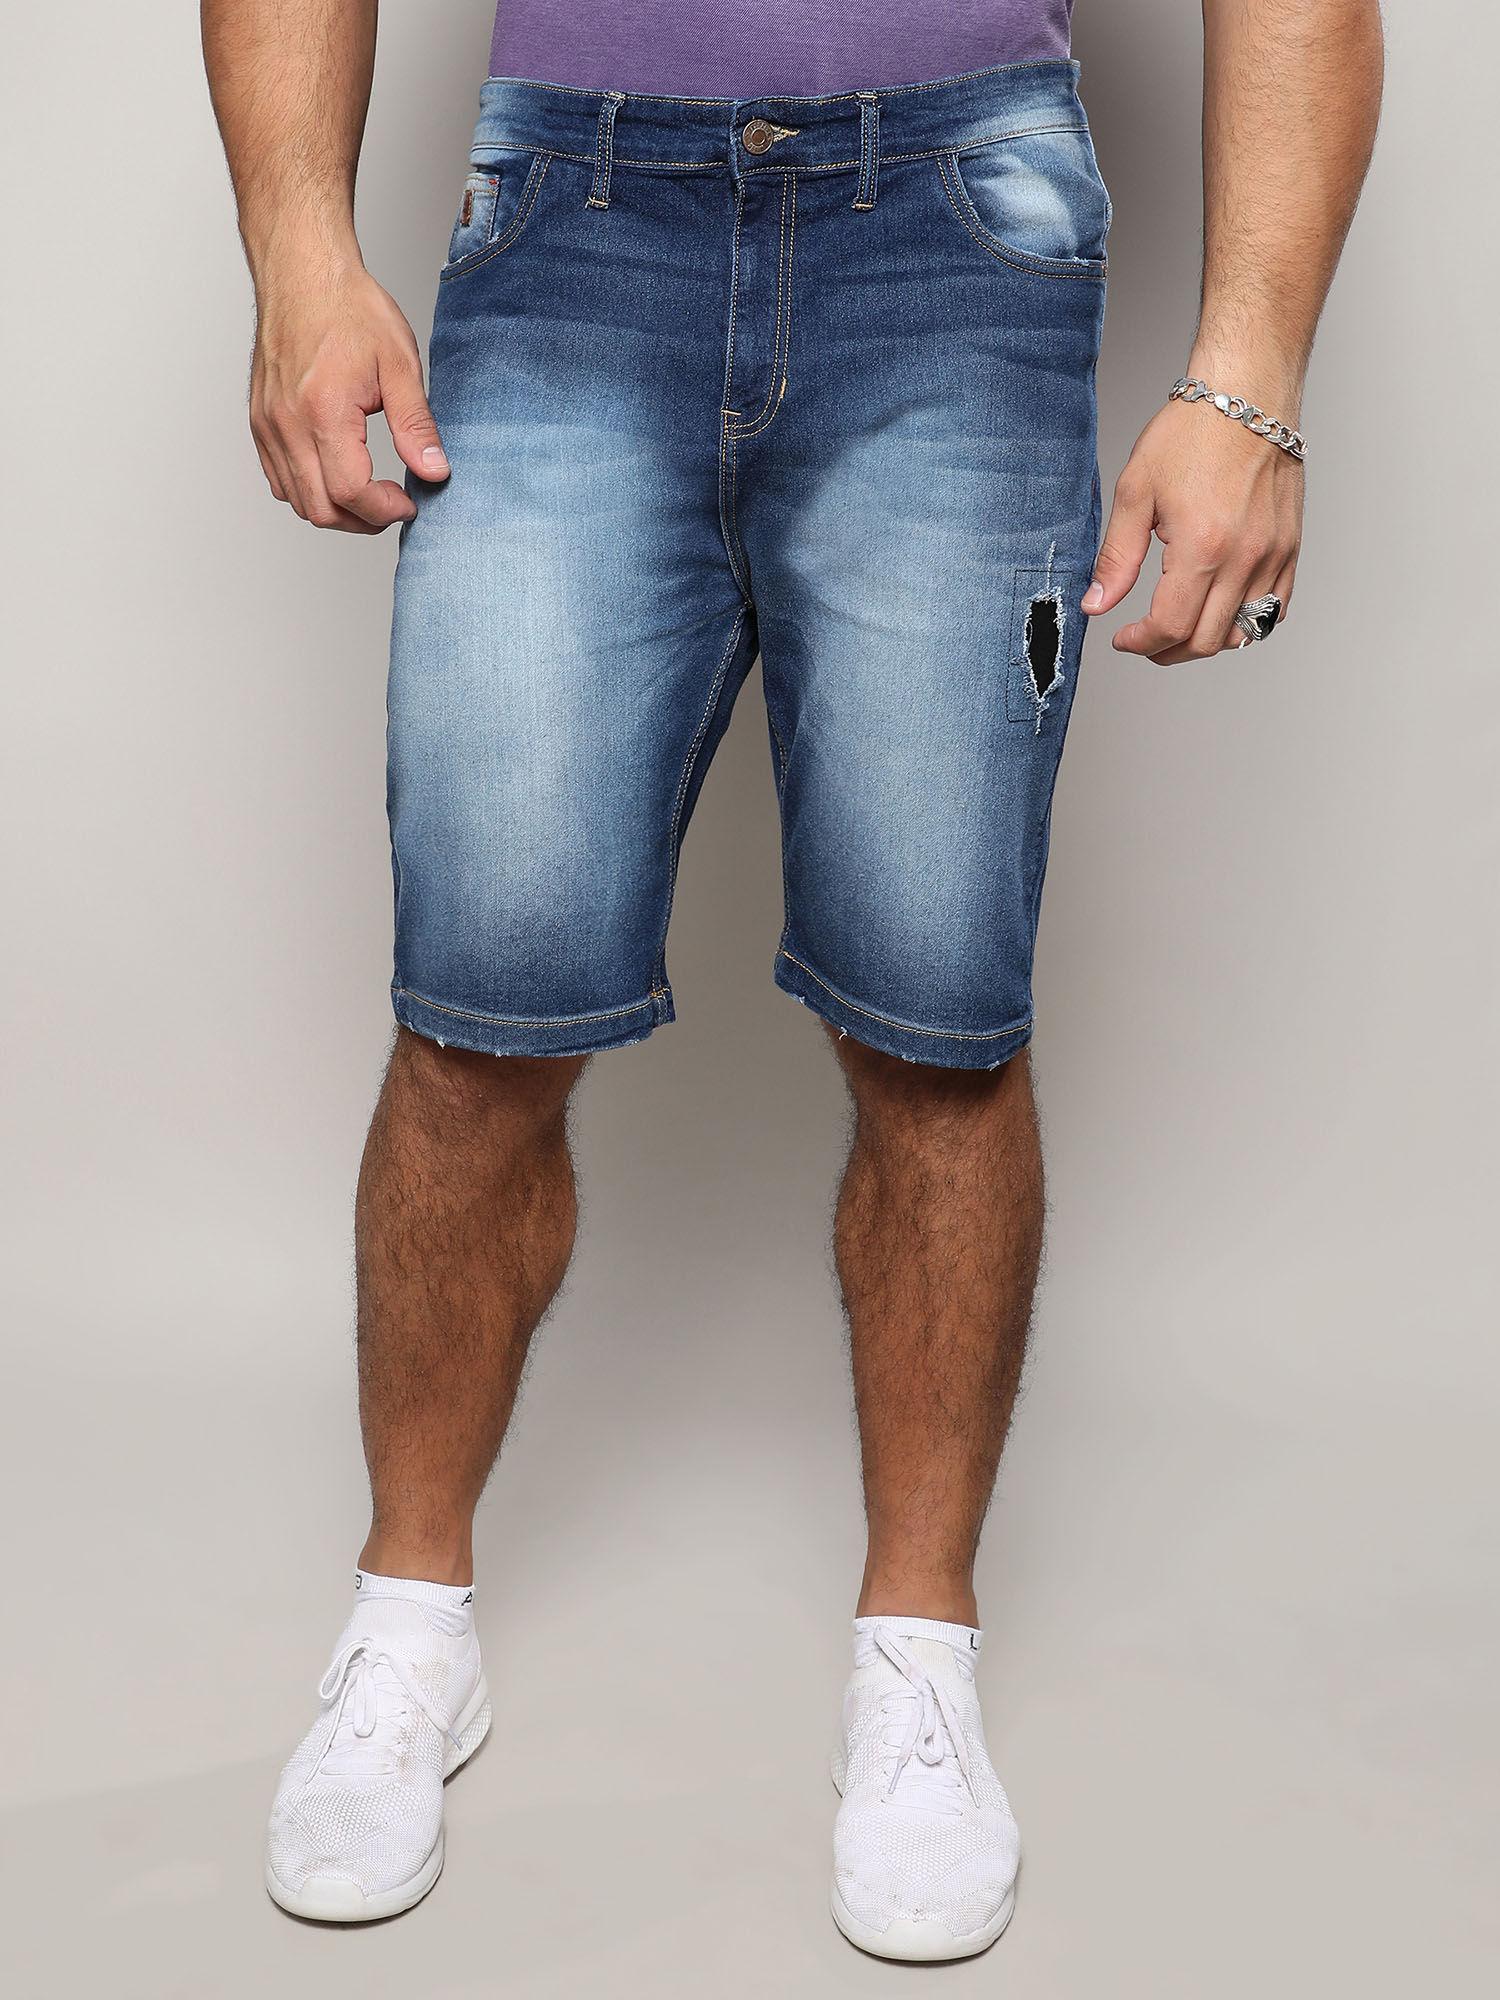 mens navy blue distressed denim shorts